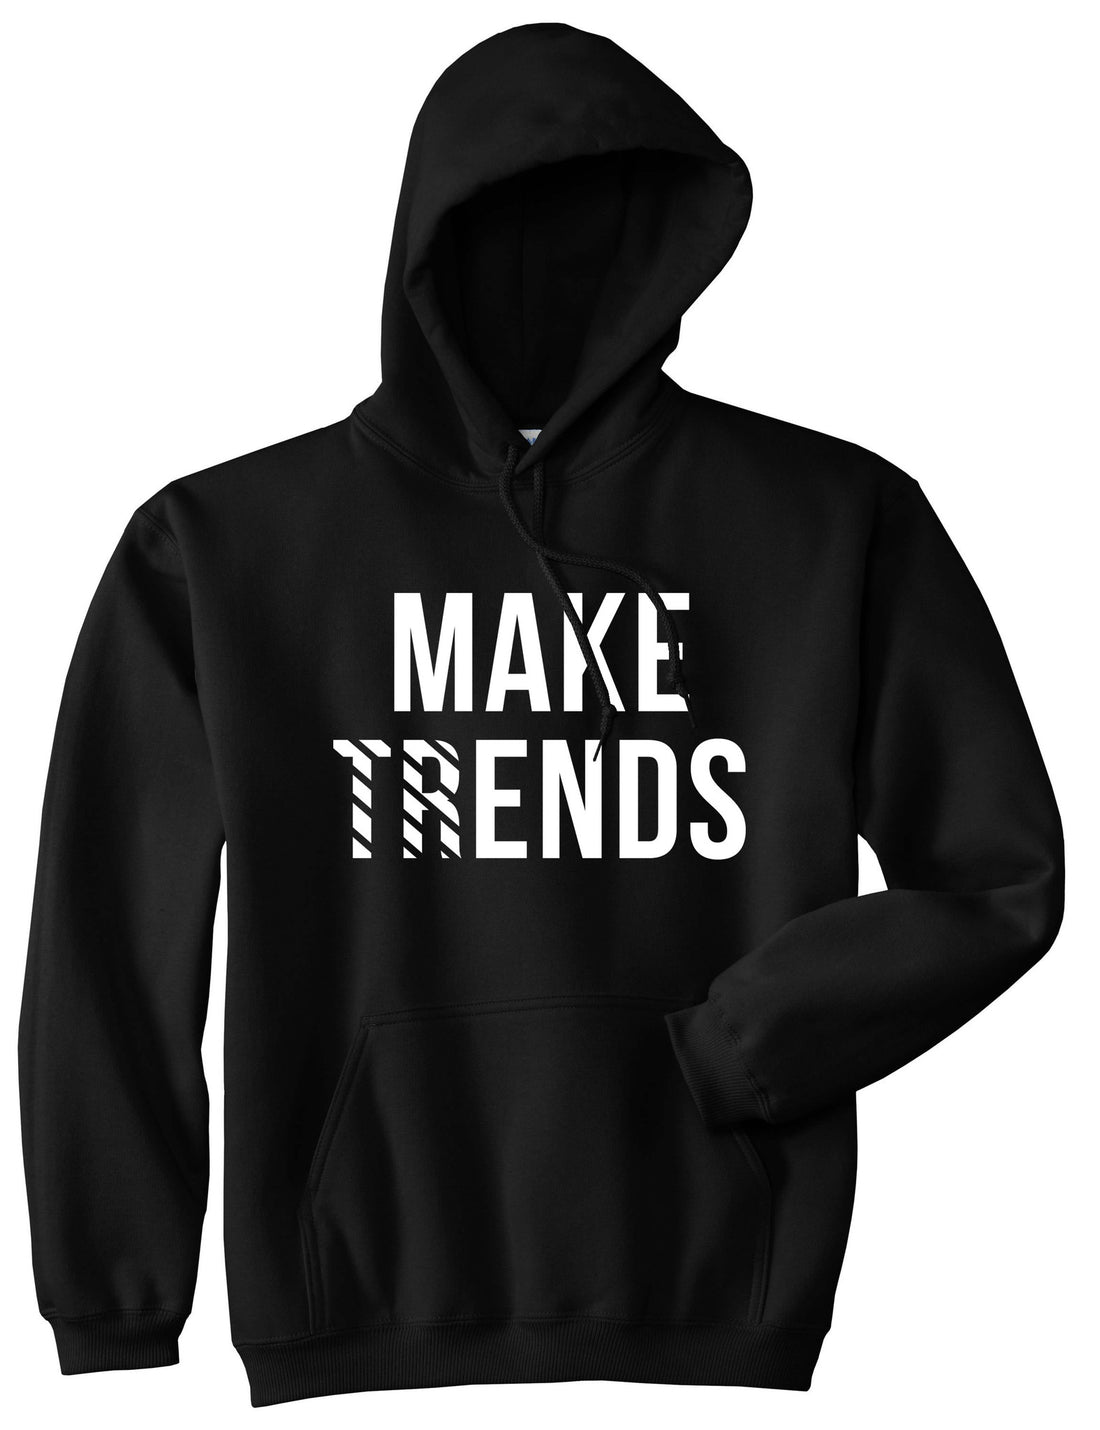 Make Trends Make Ends Pullover Hoodie Hoody in Black by Kings Of NY